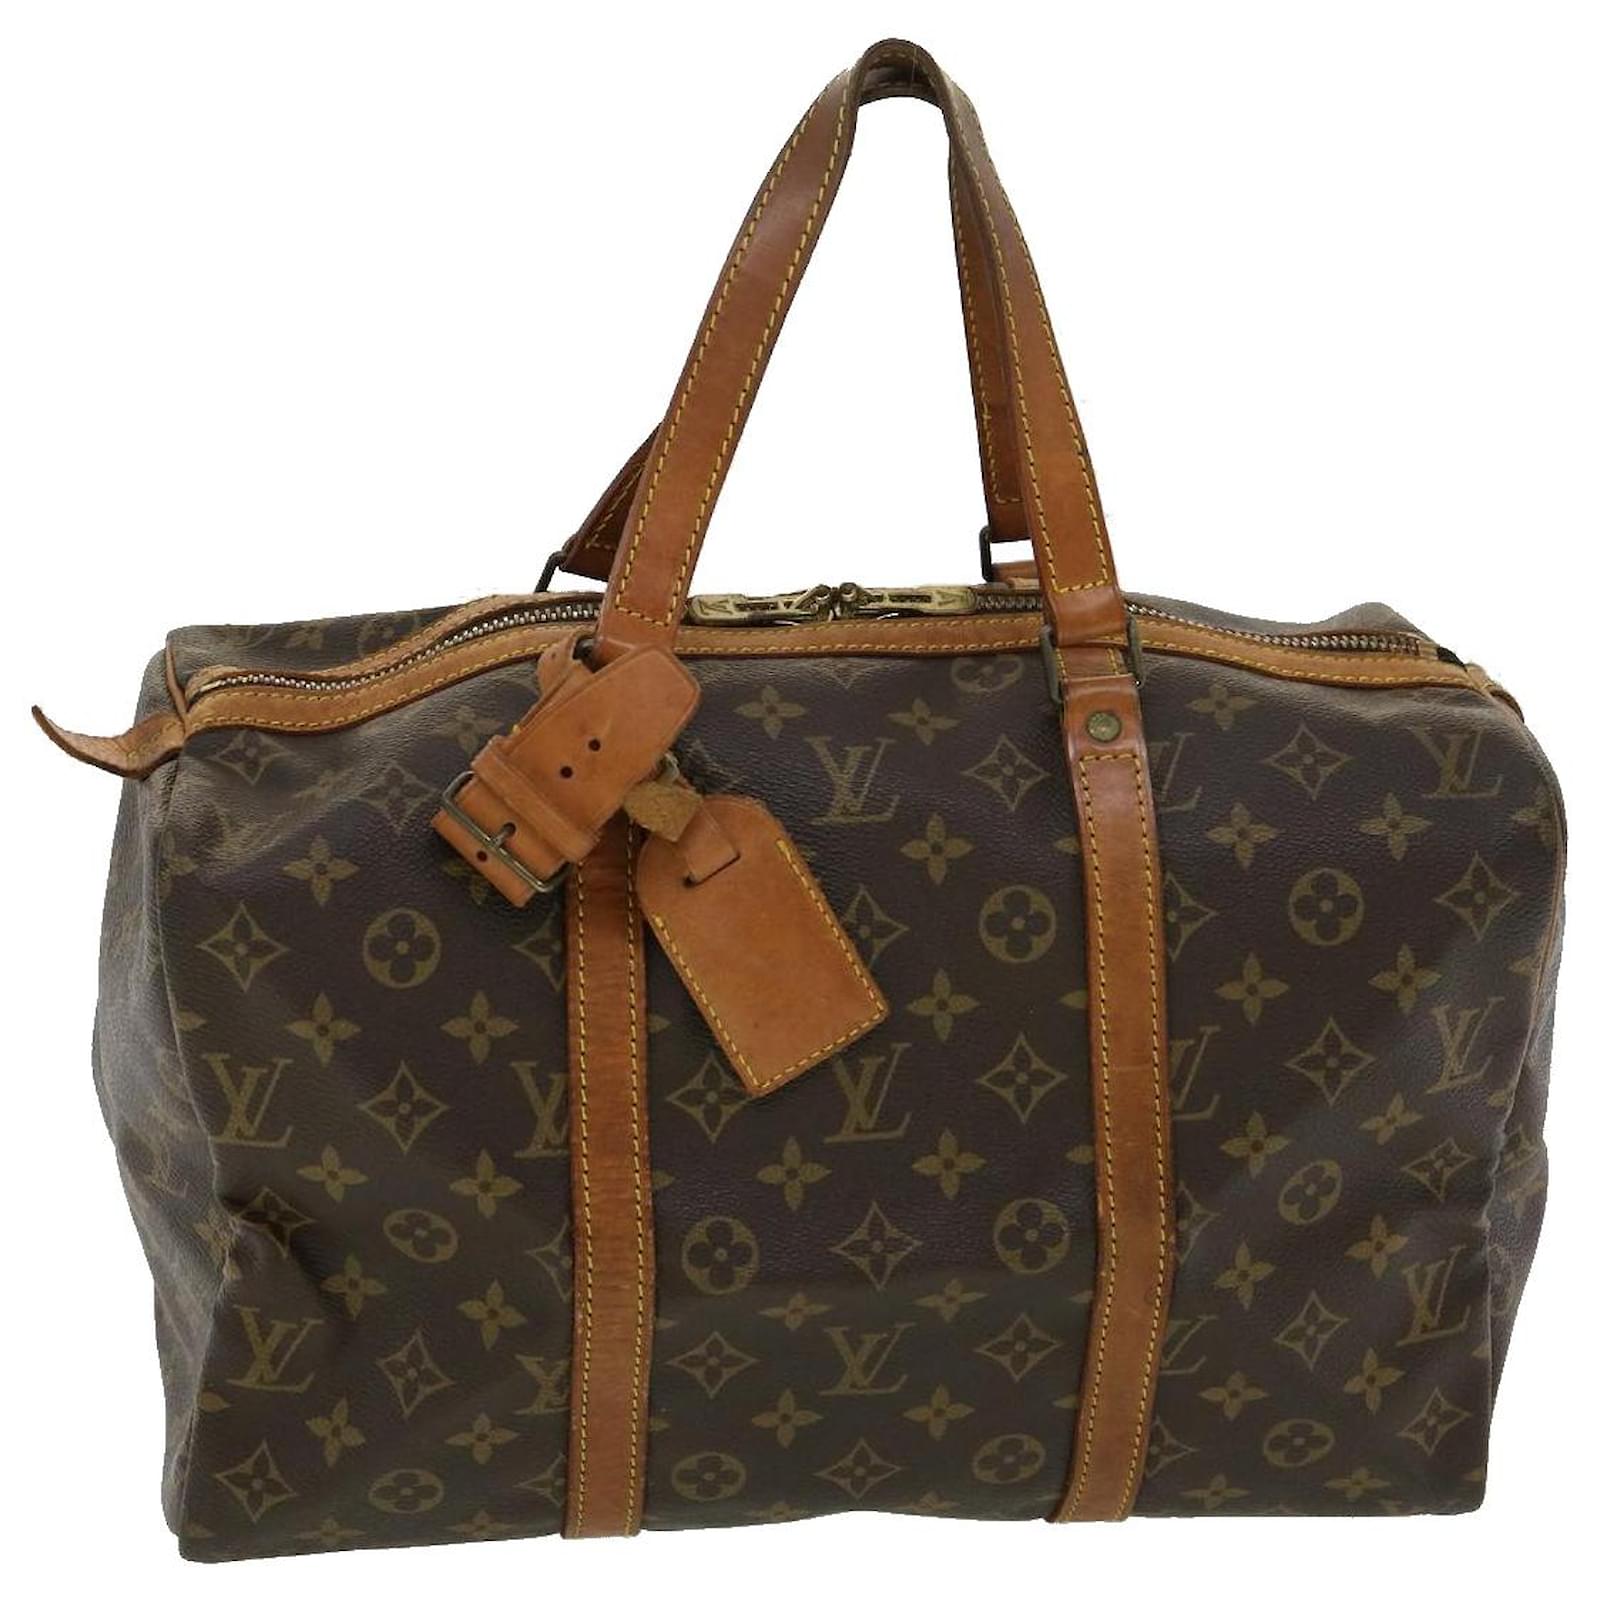 Louis Vuitton Speedy 35 Travel Bag